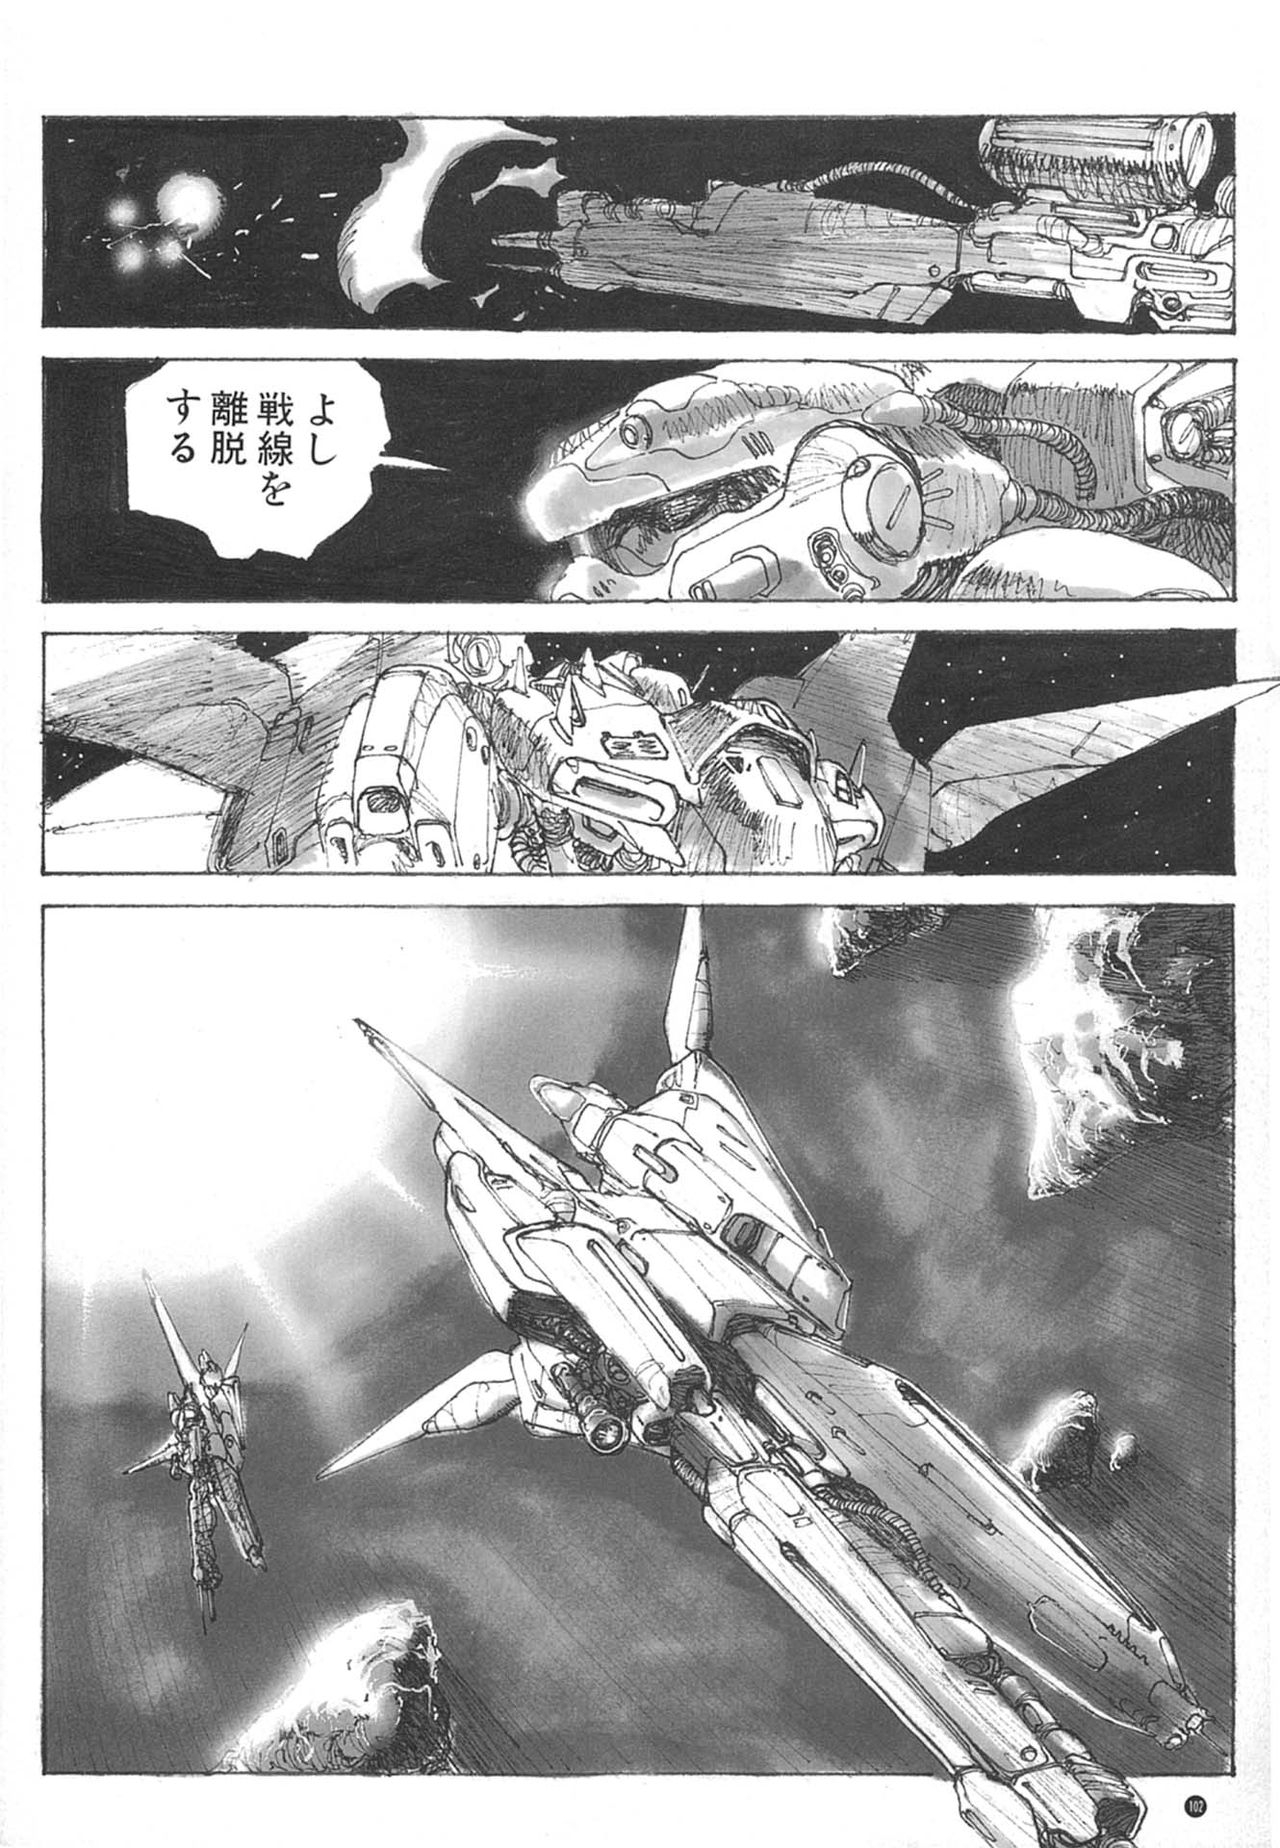 [Kazuhisa Kondo] Kazuhisa Kondo 2D & 3D Works - Go Ahead - From Mobile Suit Gundam to Original Mechanism 101